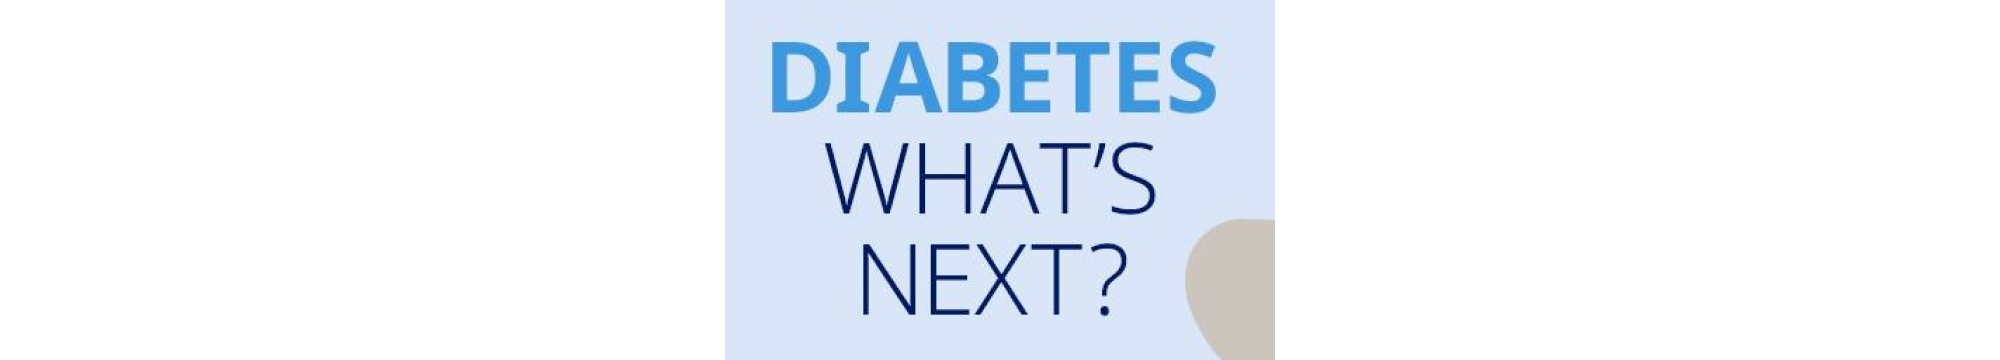 Diabetes What’s Next?